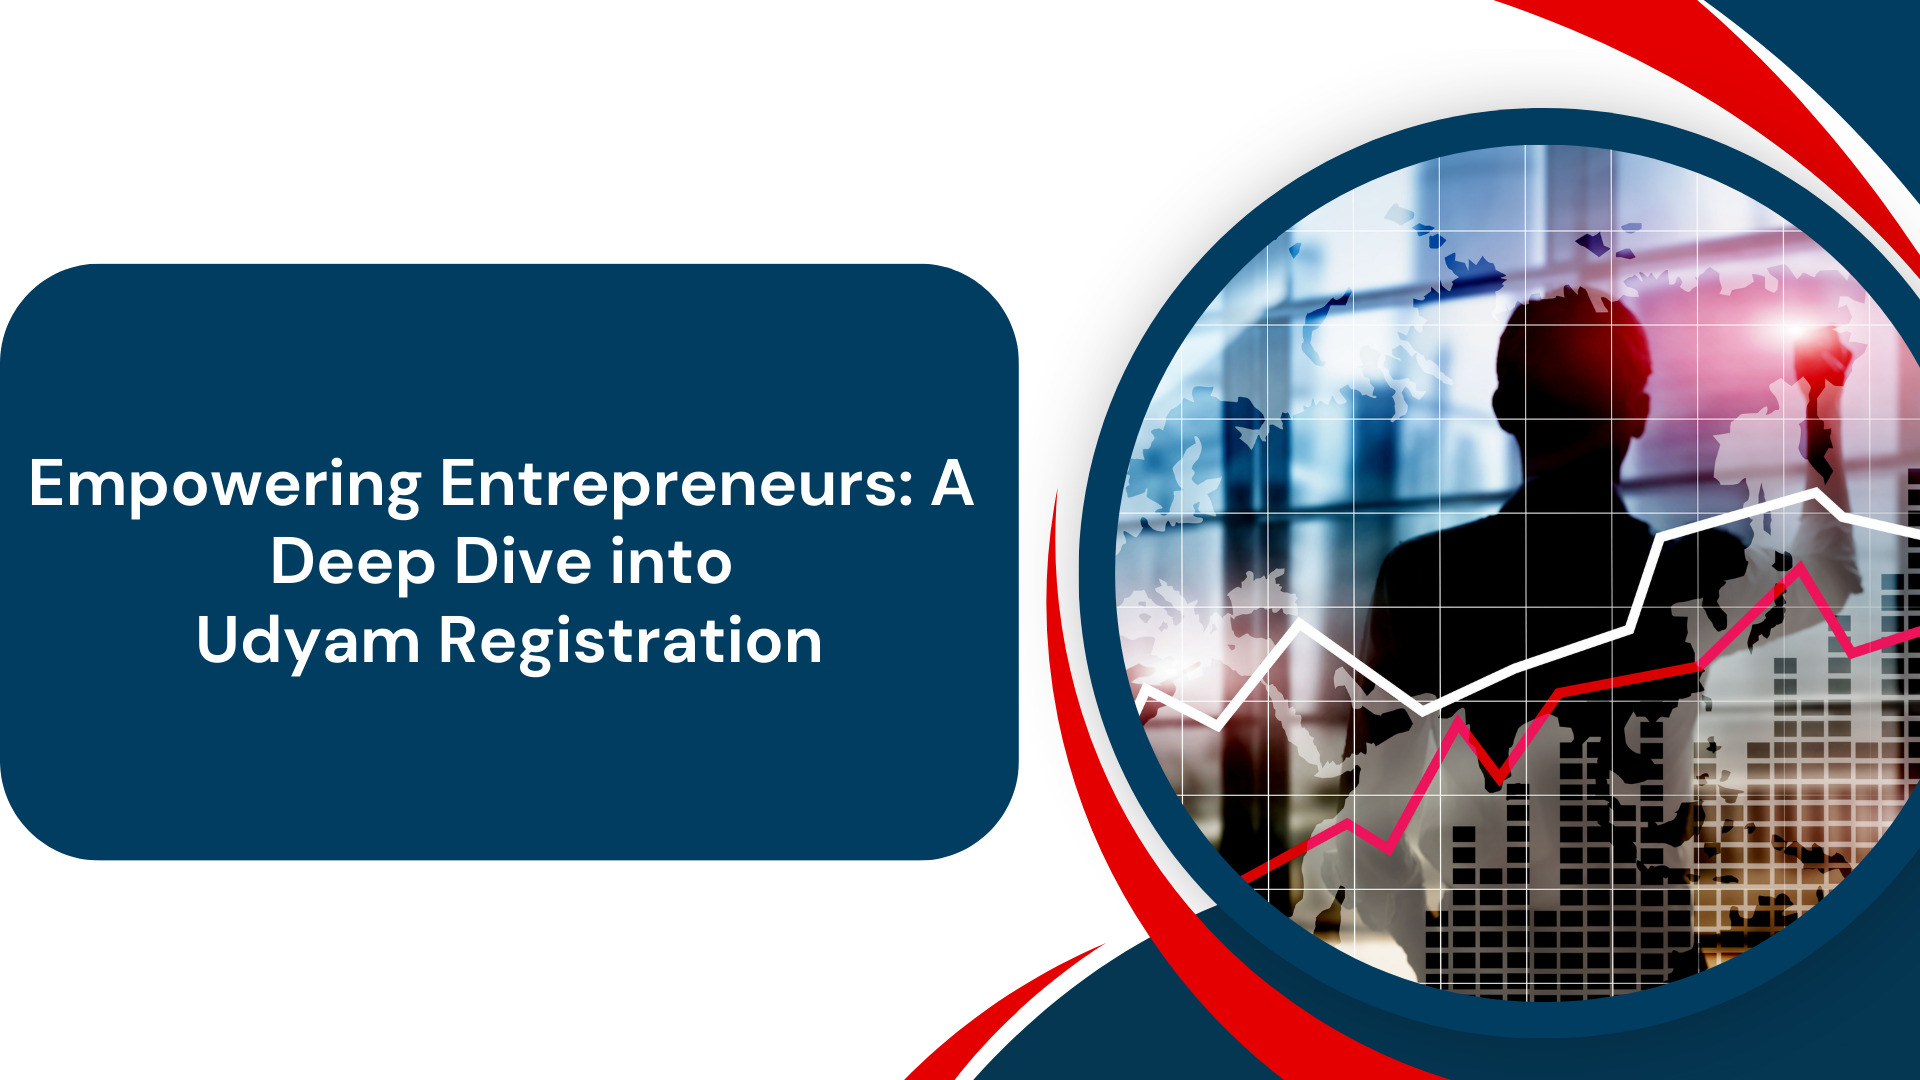 Empowering Entrepreneurs: A Deep Dive into Udyam Registration